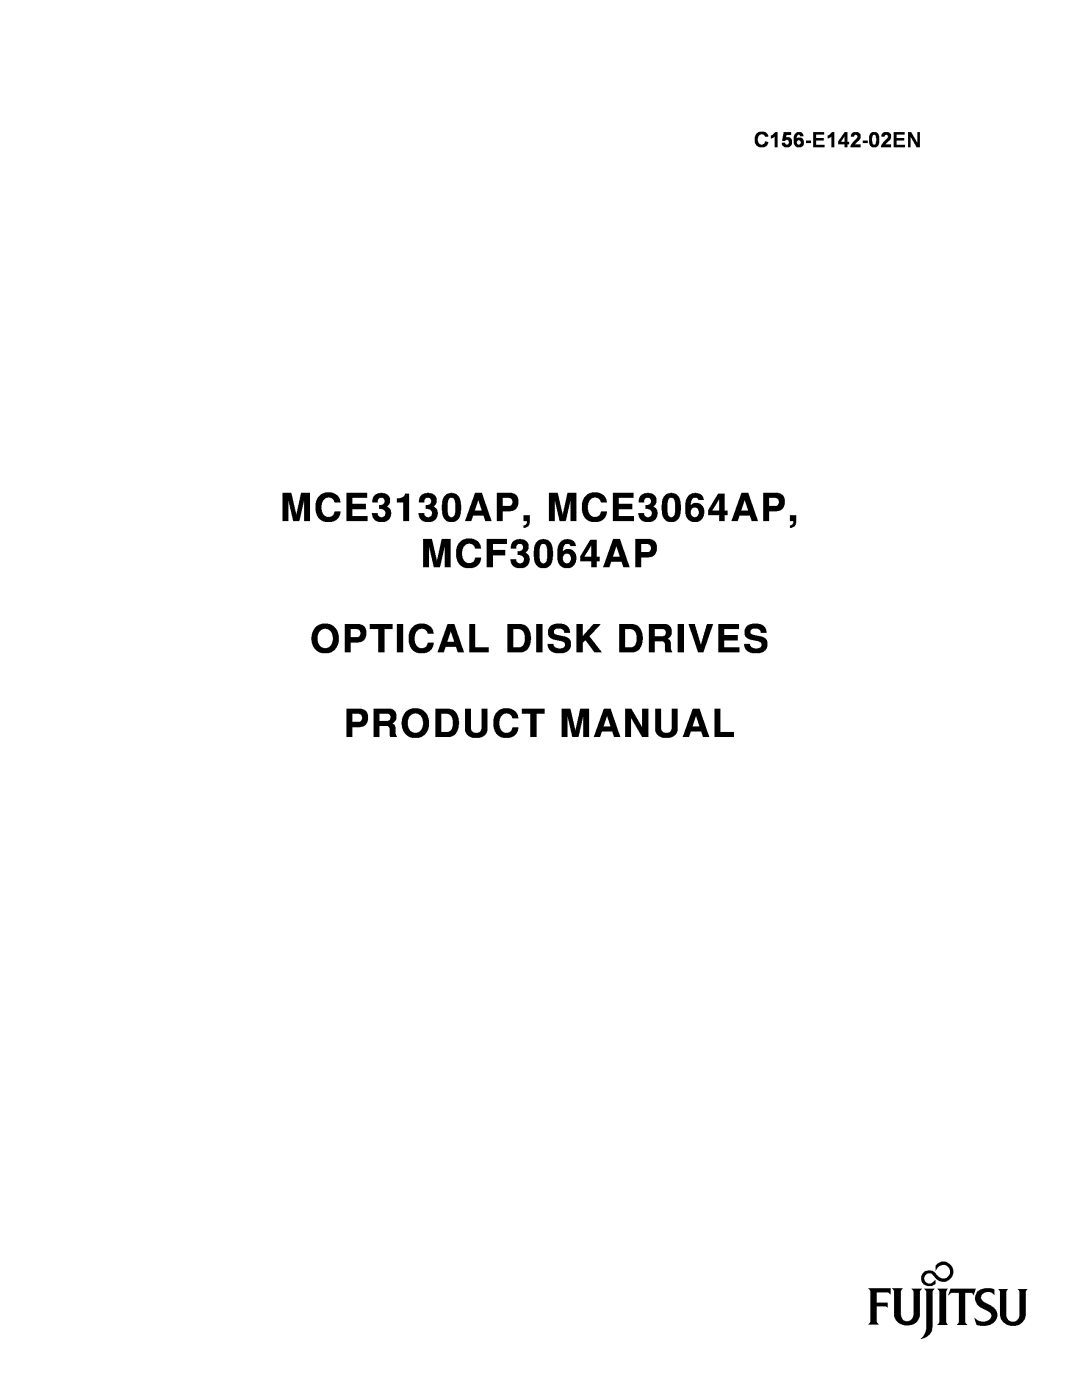 Fujitsu manual MCE3130AP, MCE3064AP MCF3064AP OPTICAL DISK DRIVES PRODUCT MANUAL, C156-E142-02EN 